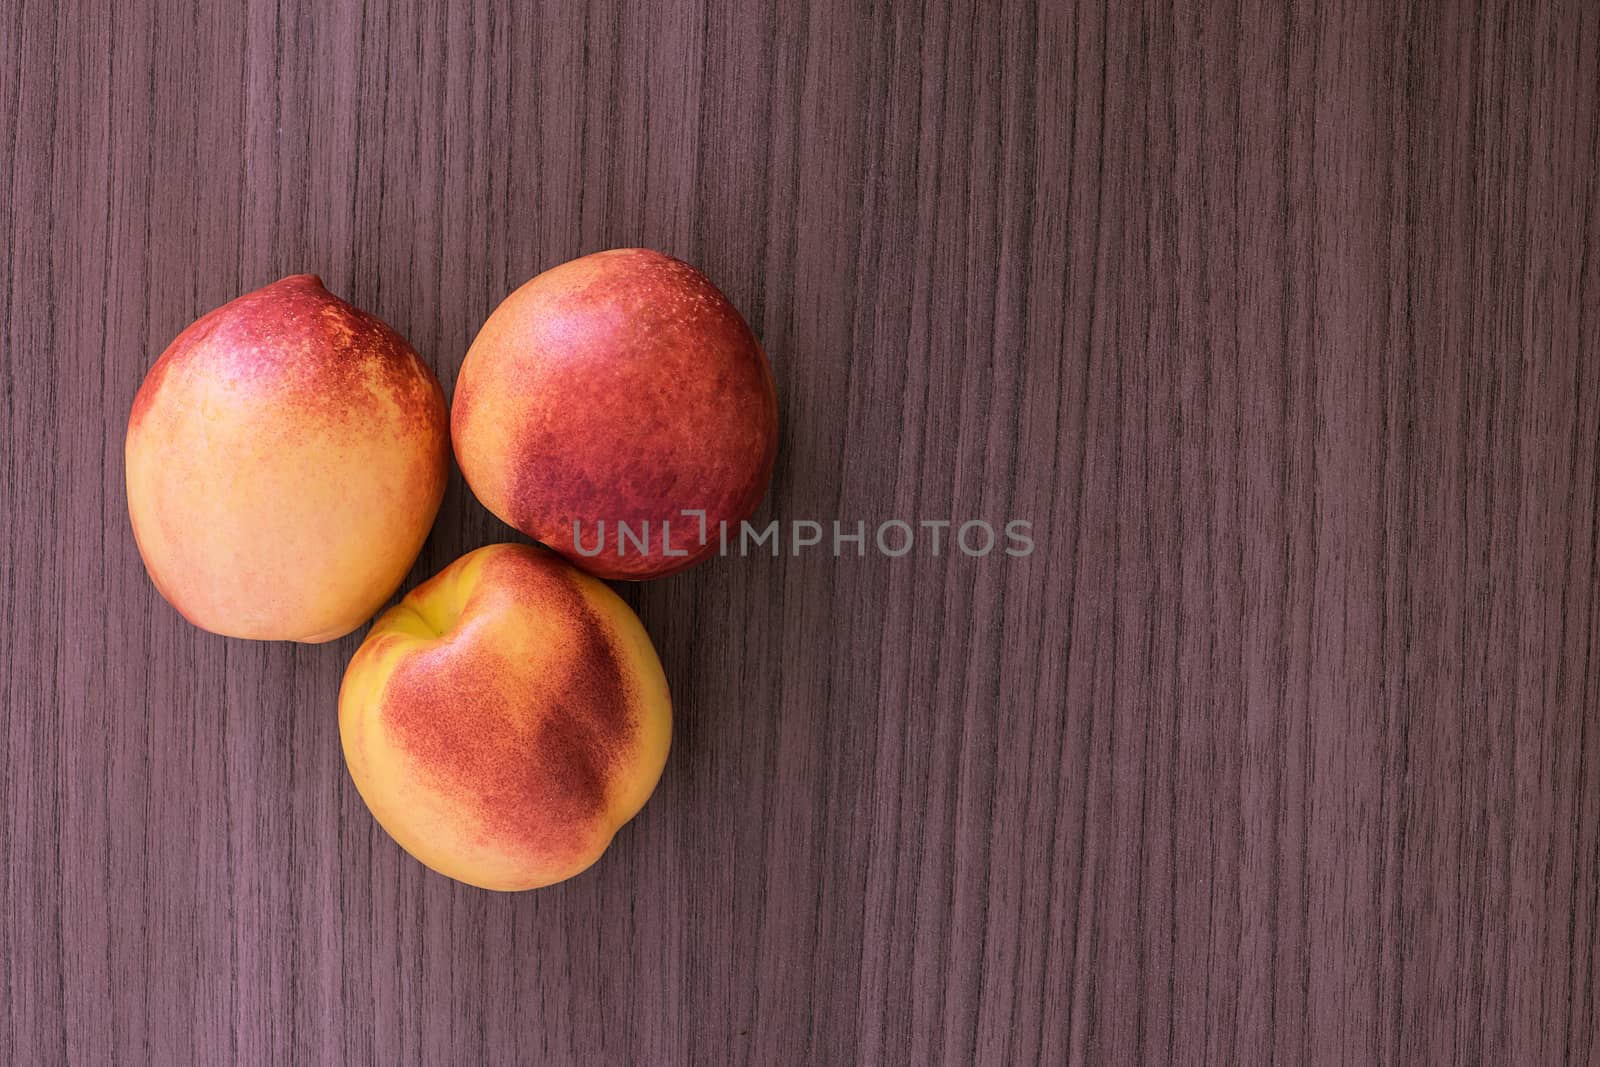 Three peaches by dalomo84